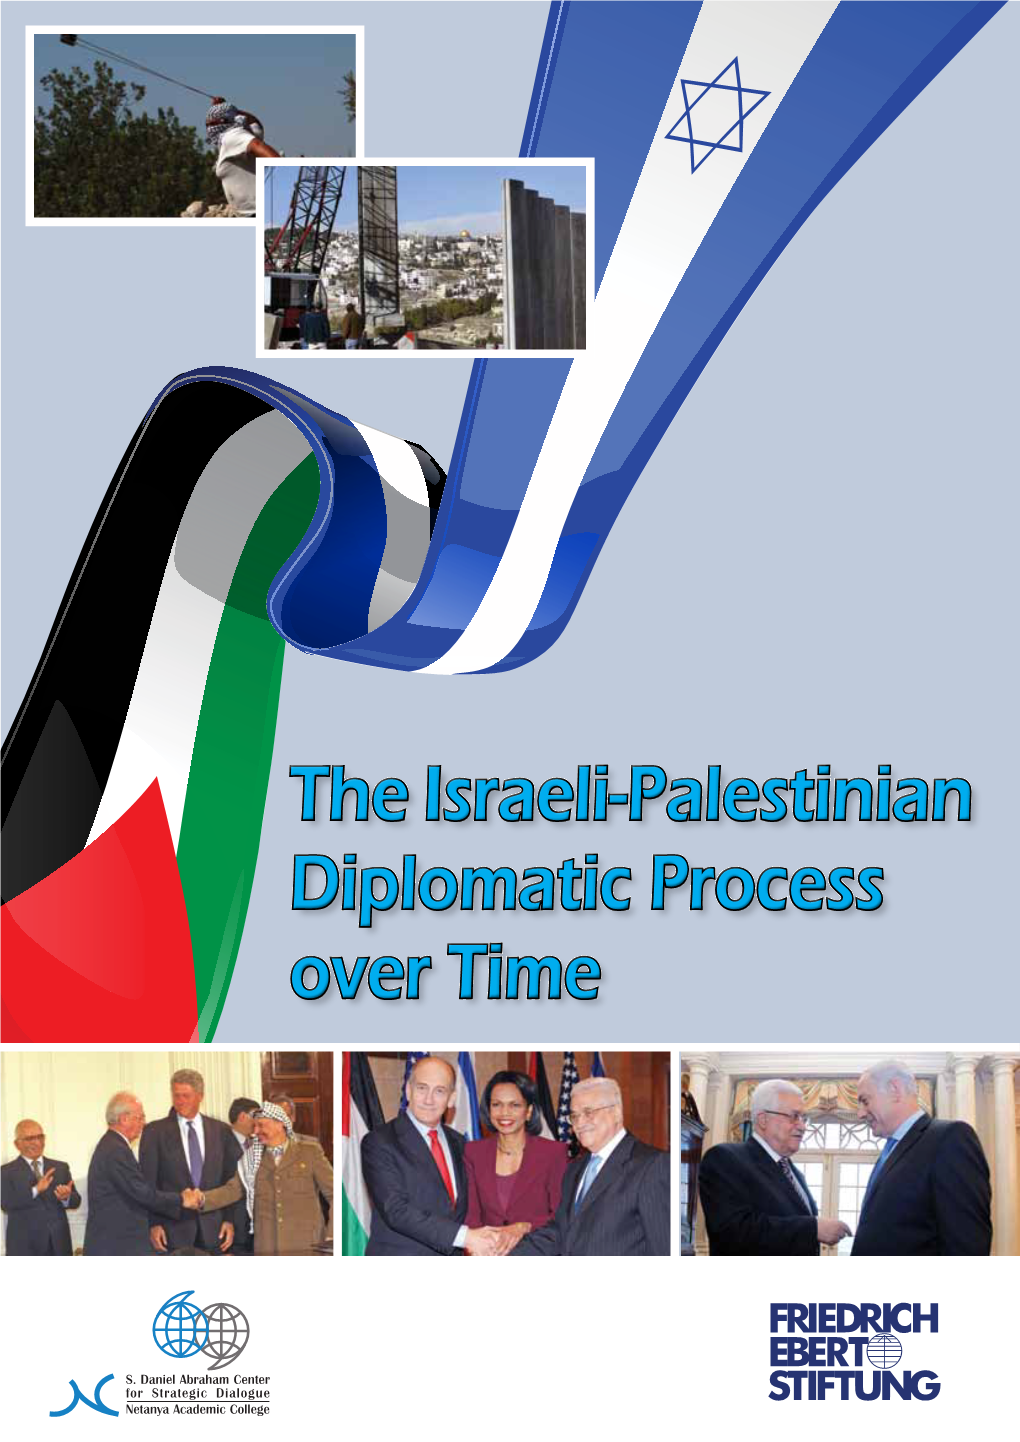 The Israeli-Palestinian Diplomatic Process Over Time the Israeli-Palestinian Diplomatic Process Over Time Graﬁc Desing and Print: Merav-Dascalu Publishing Ltd